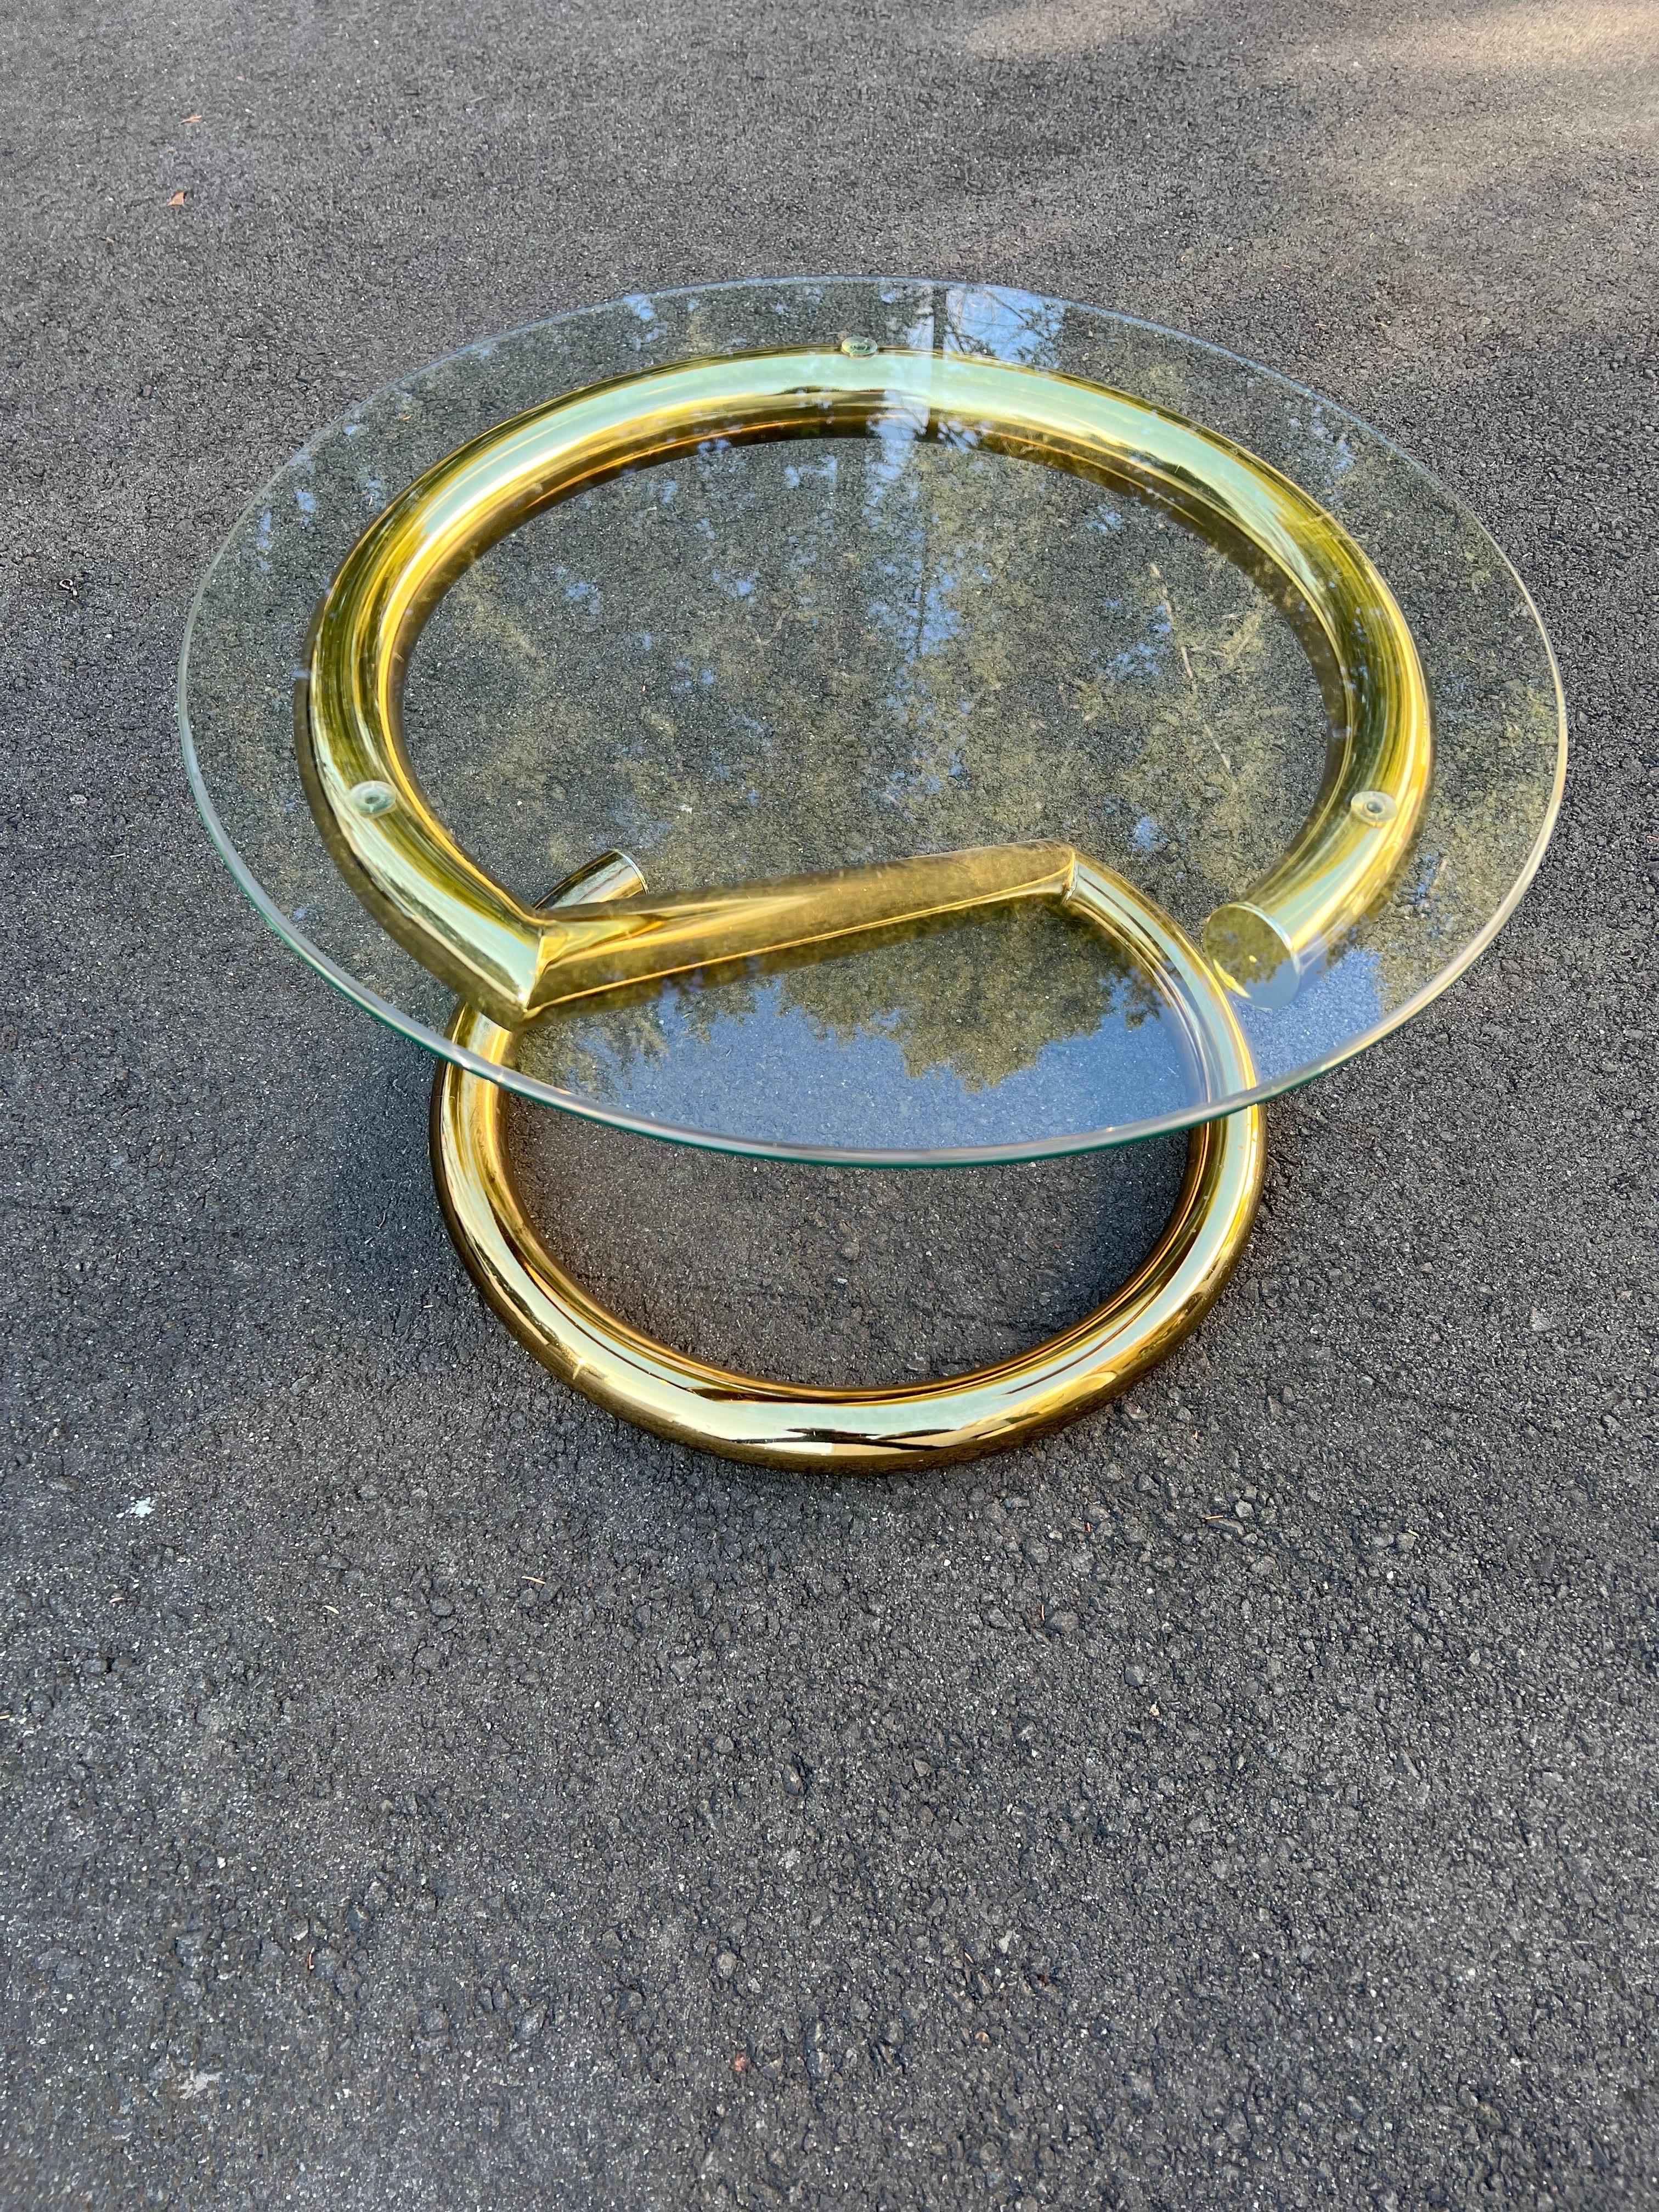 Karl Springer Style Round “Z” Table in Brass 1